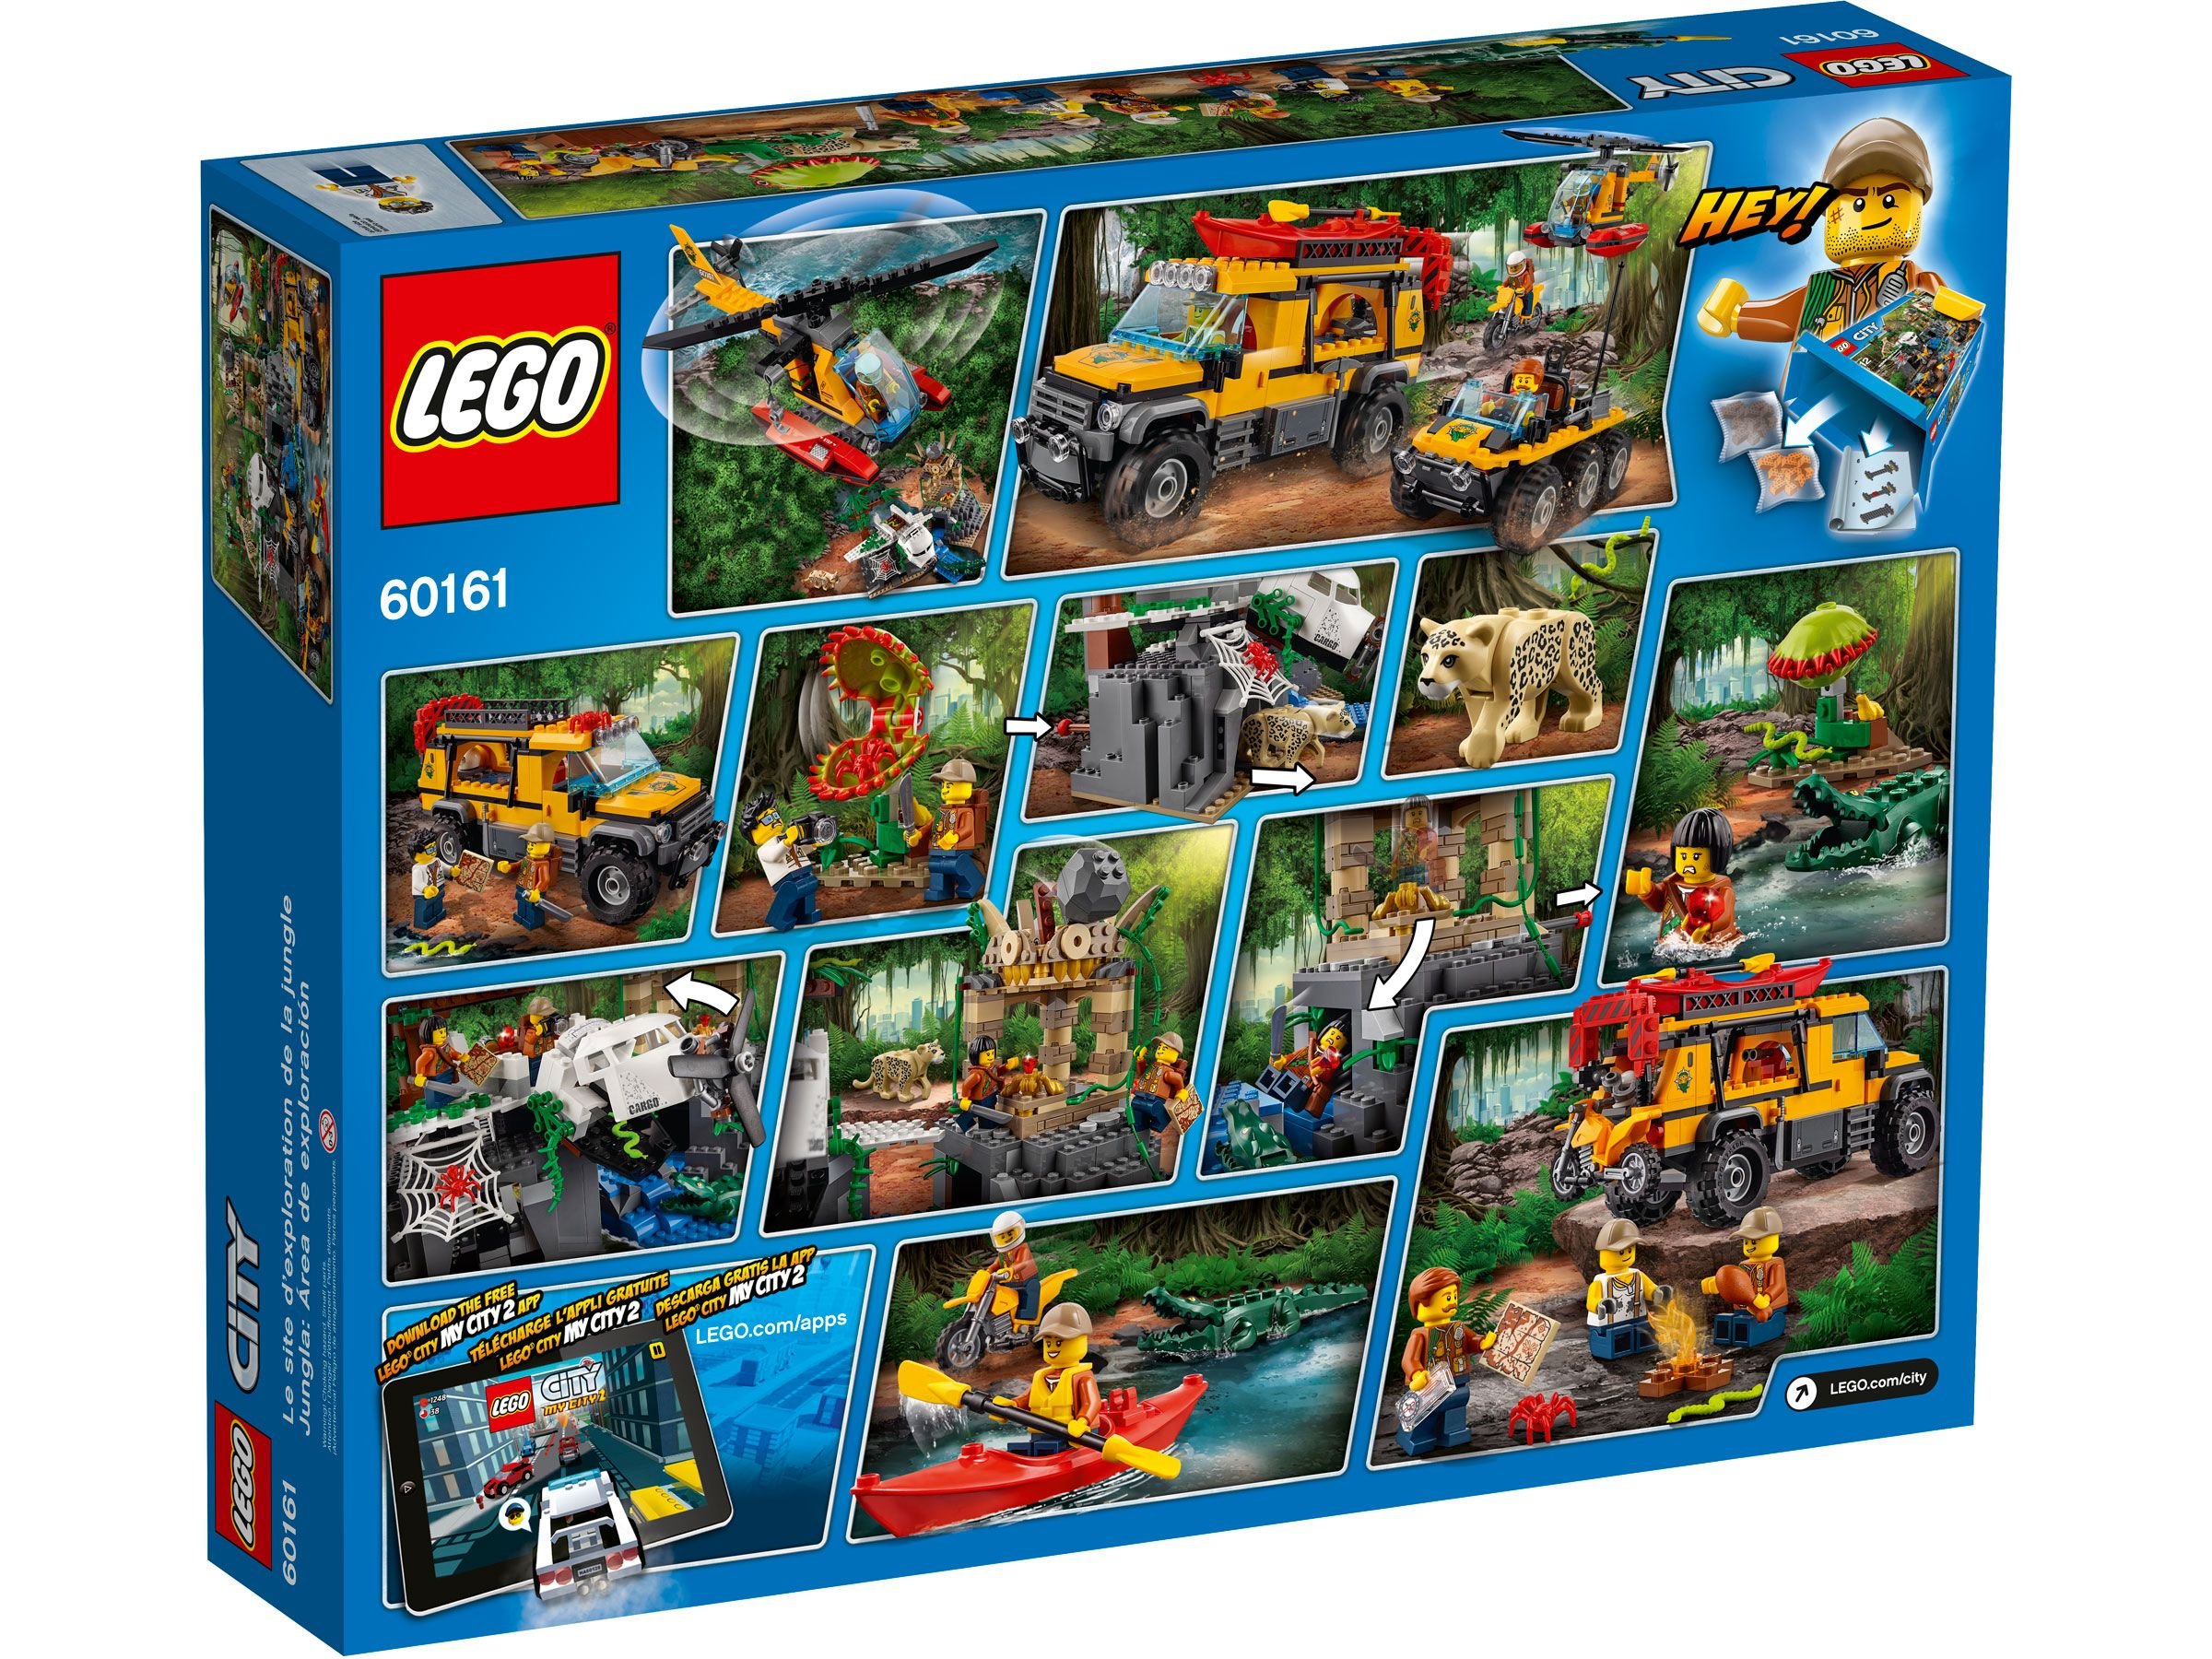 LEGO City 60161 Dschungel-Forschungsstation LEGO_60161_Box5_v39.jpg